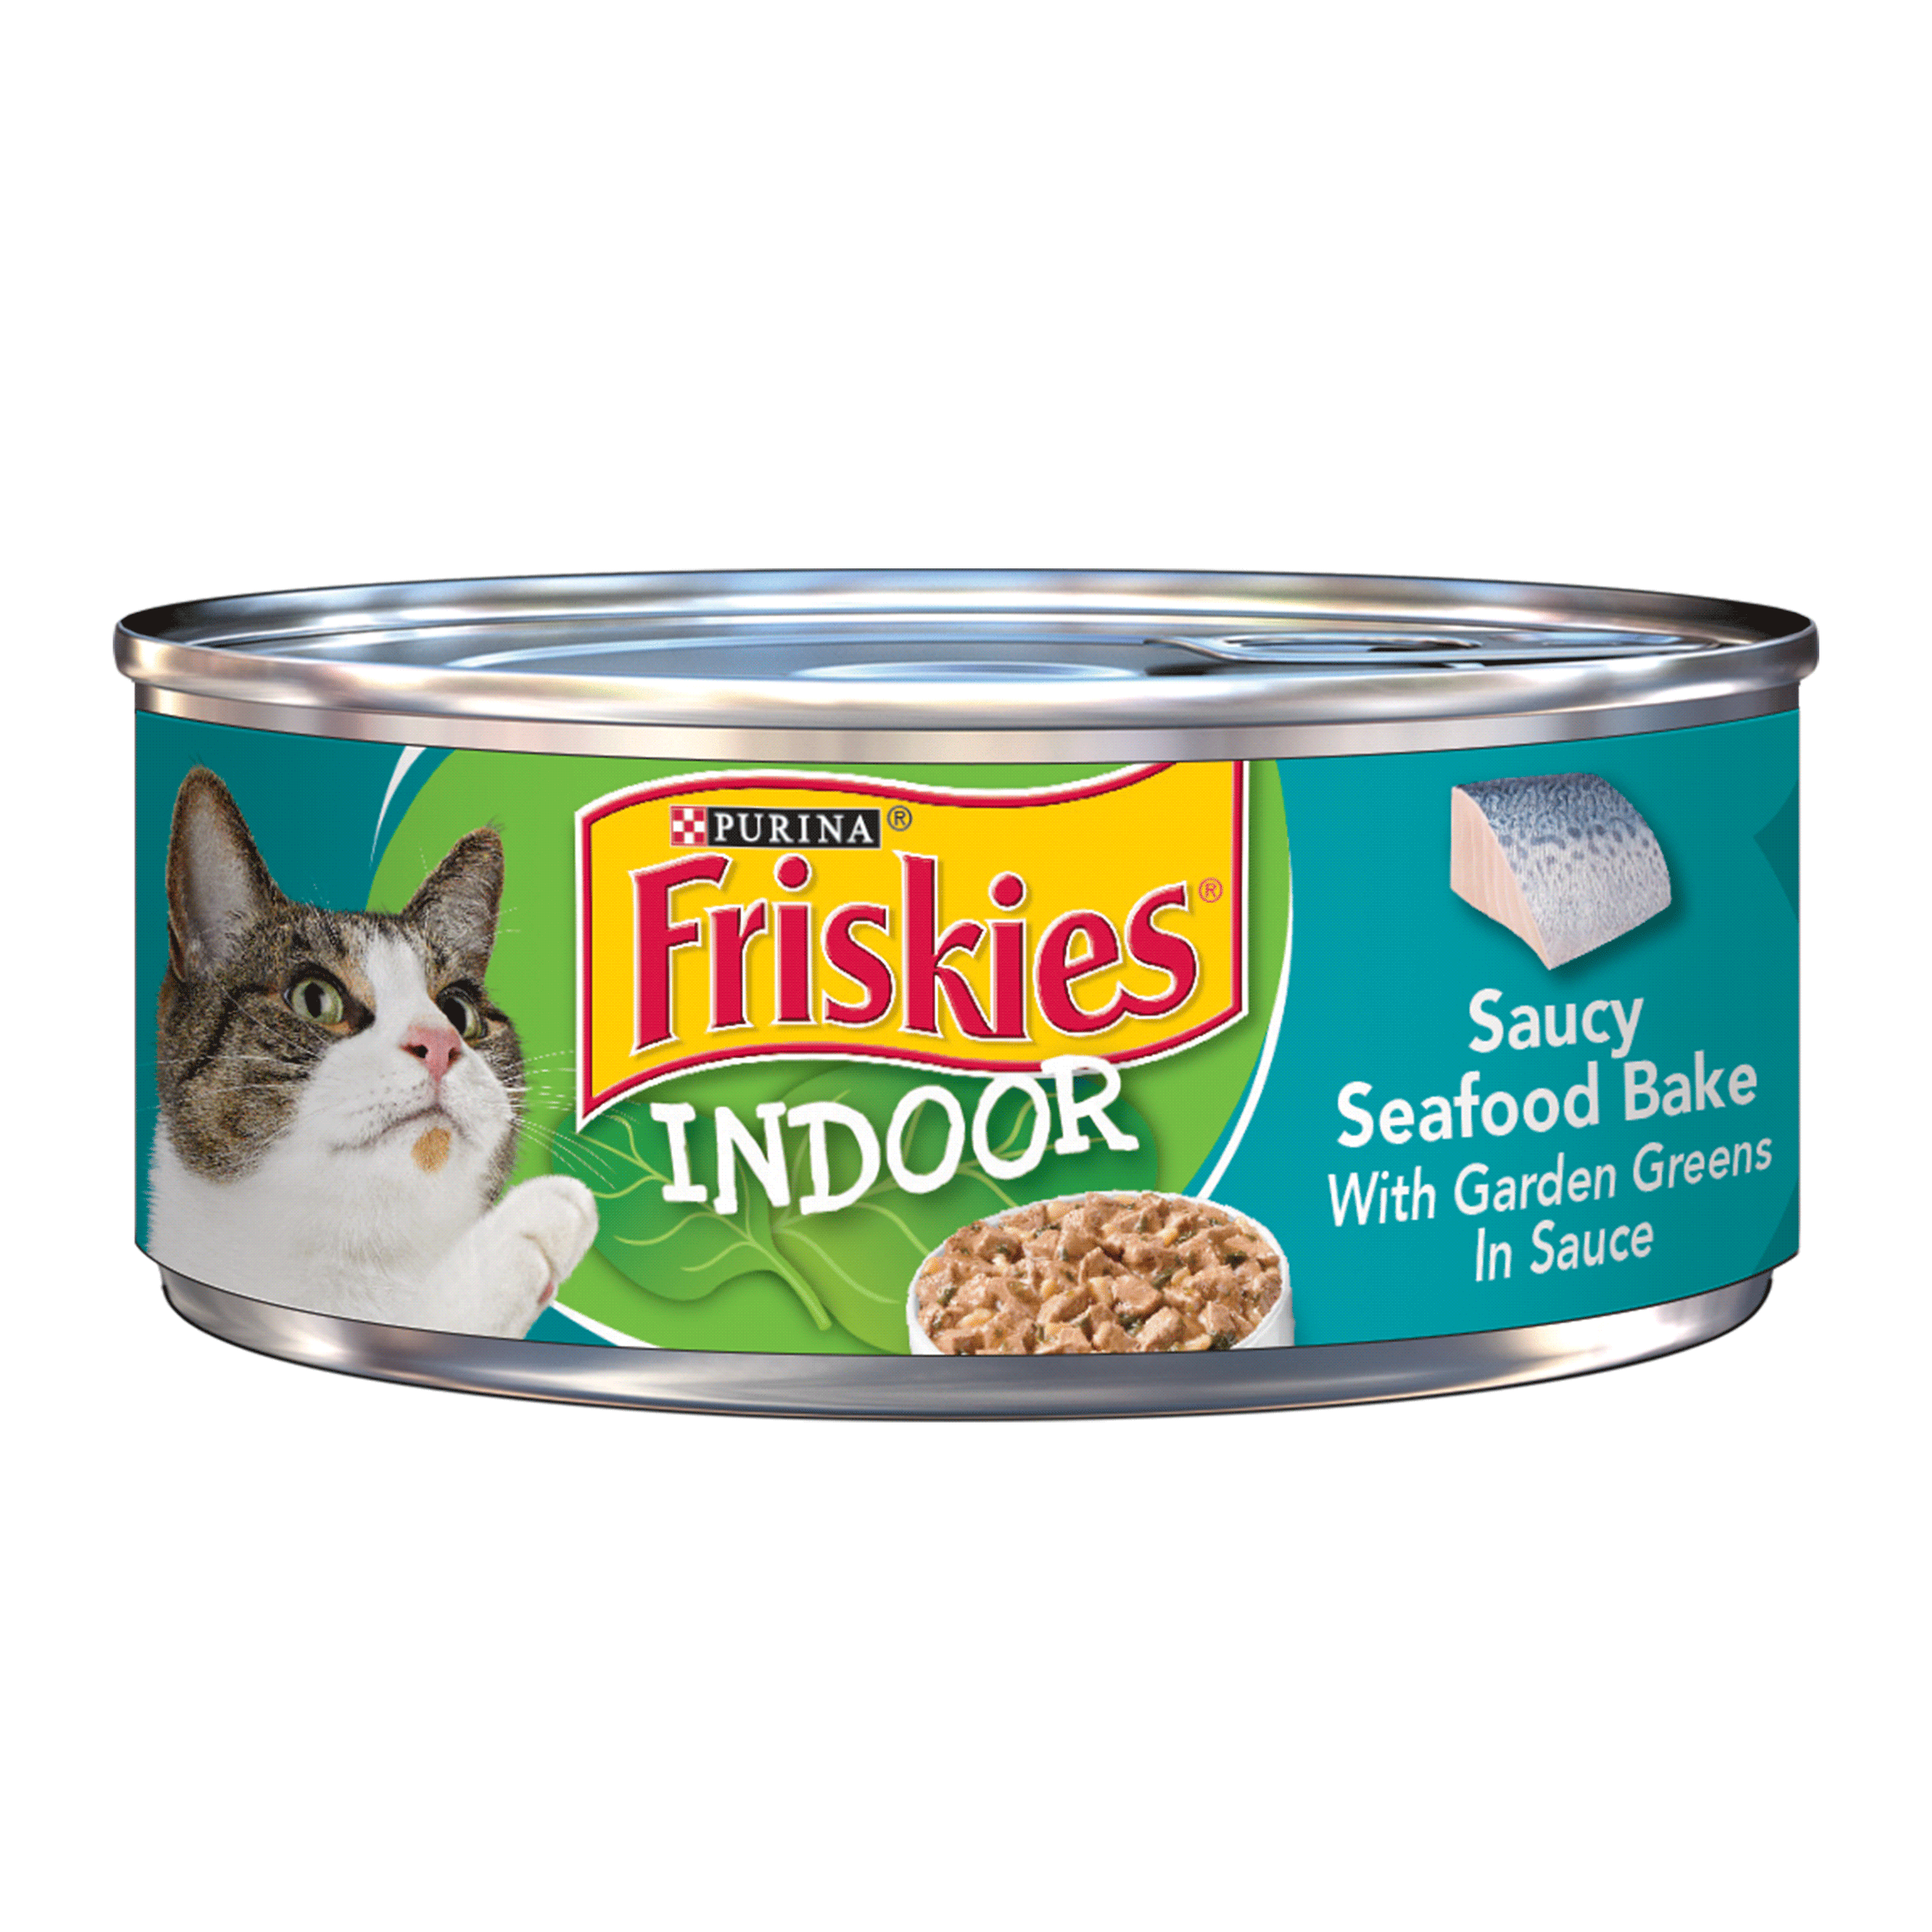 Friskies Indoor Saucy Seafood Bake Wet Cat Food in Sauce Value Pack, 5